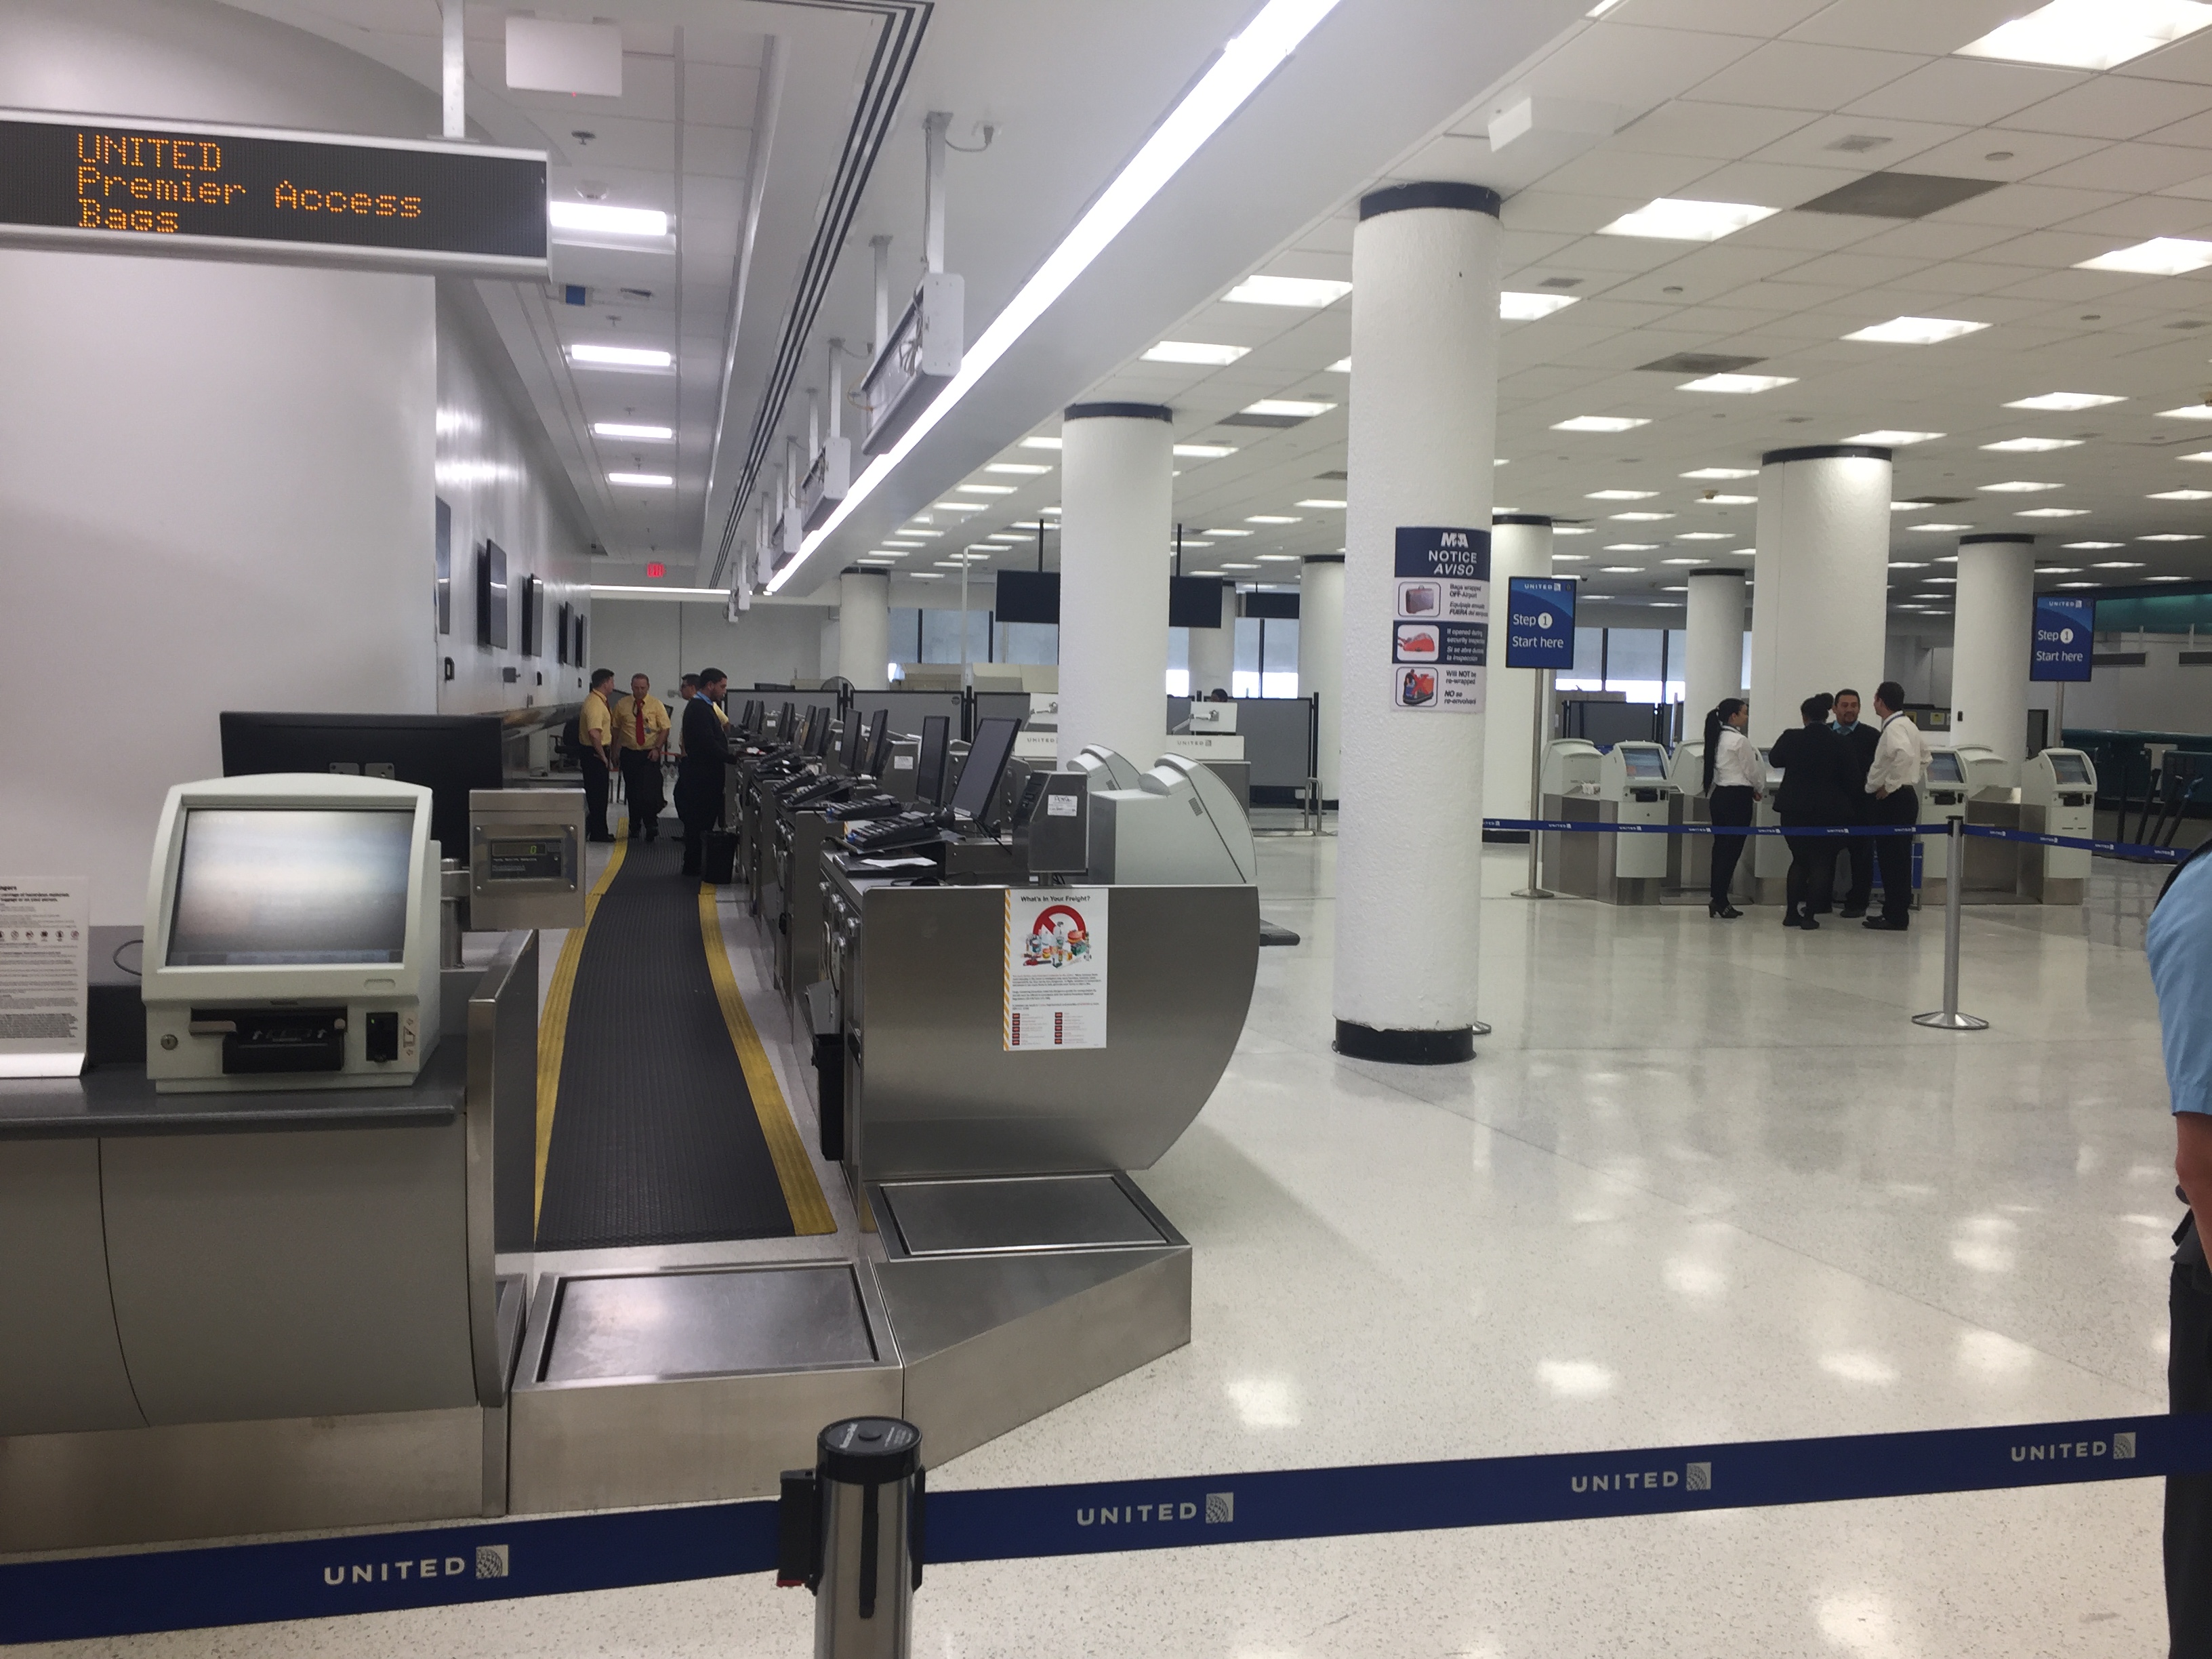 Miami International Airport North Terminal Renovation - Airport Technology